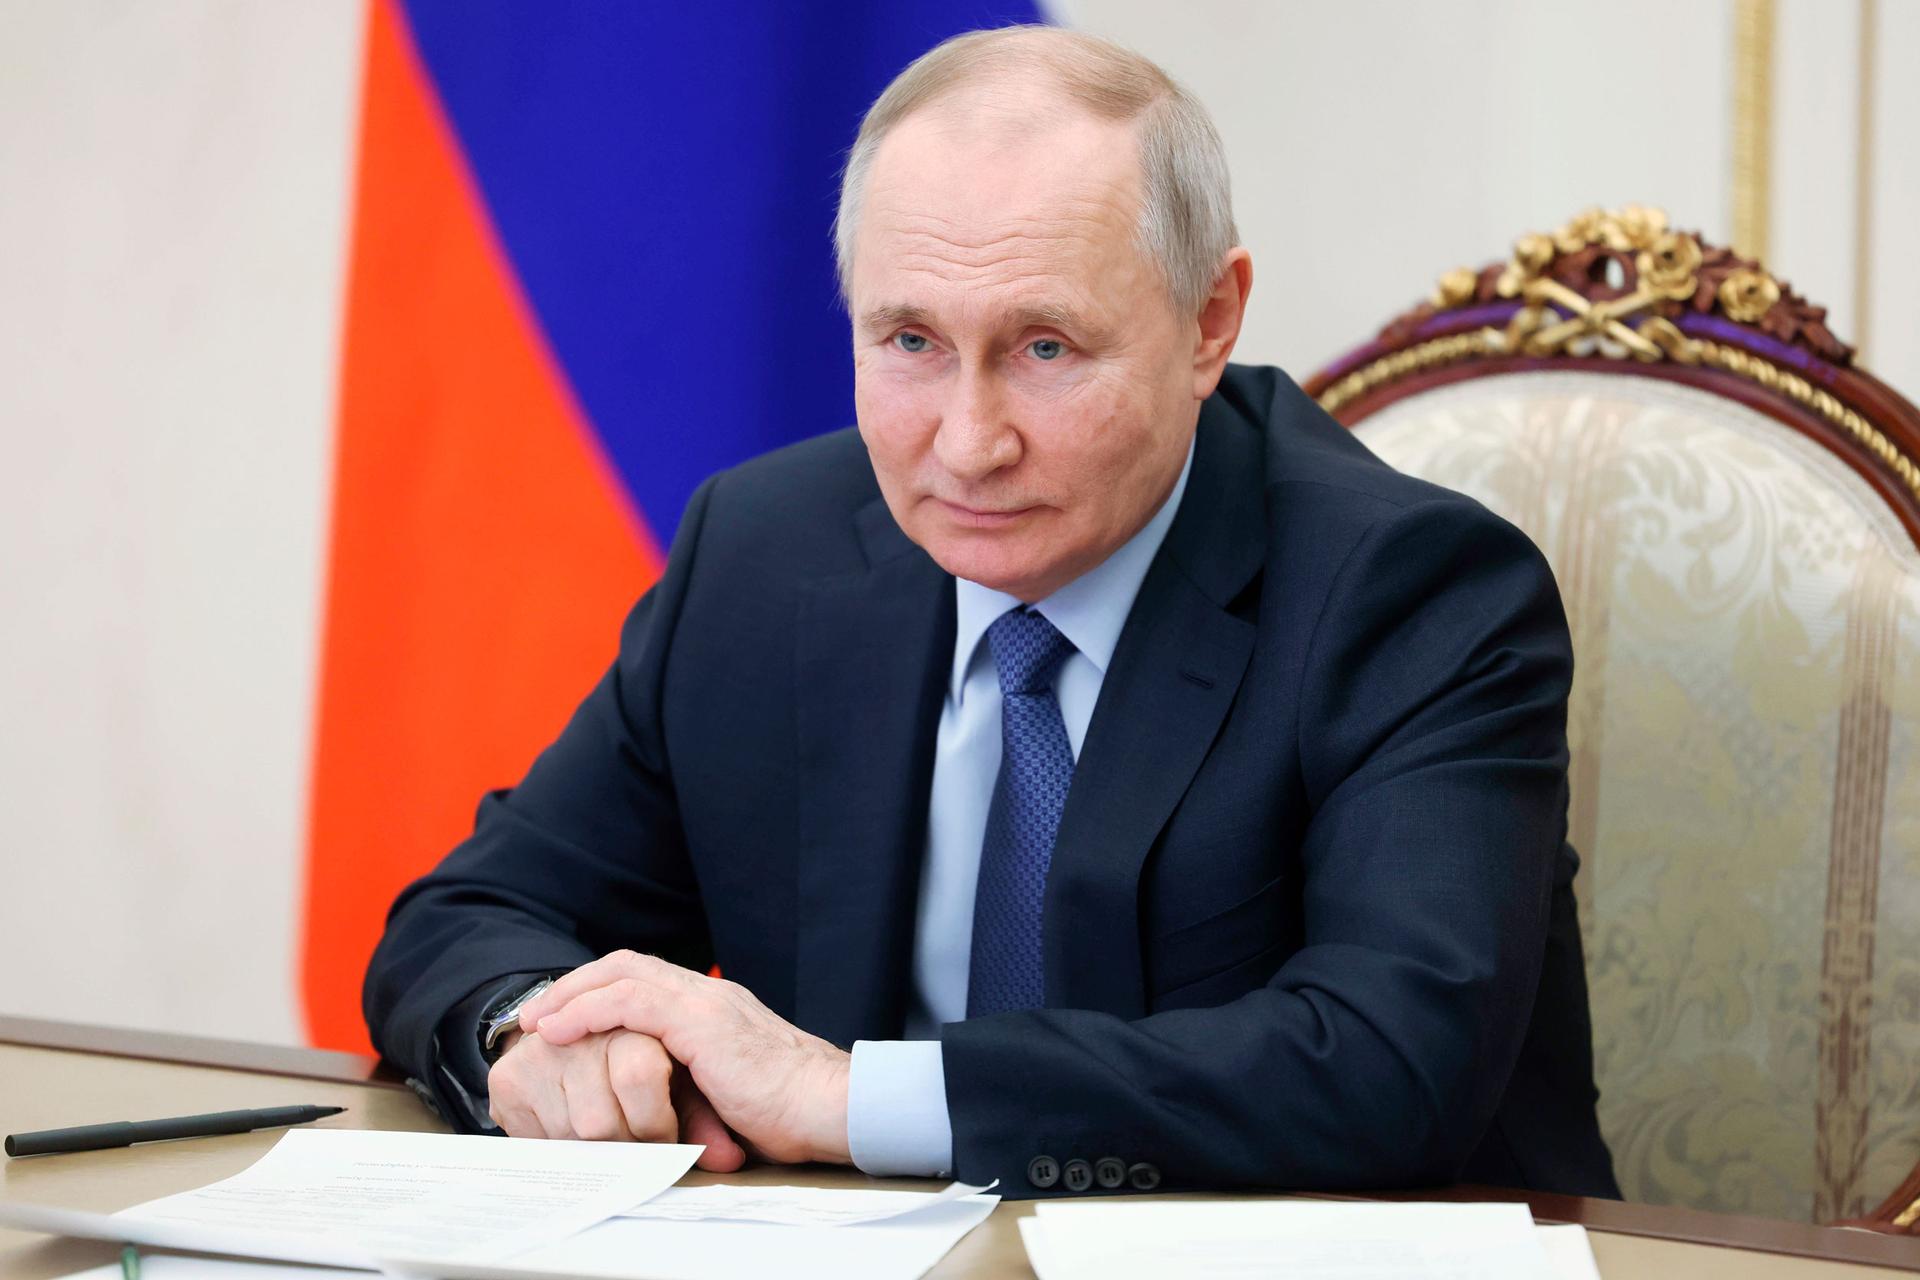 Russian President Vladimir Putin chairs a meeting on the social and economic development of Crimea and Sevastopol.